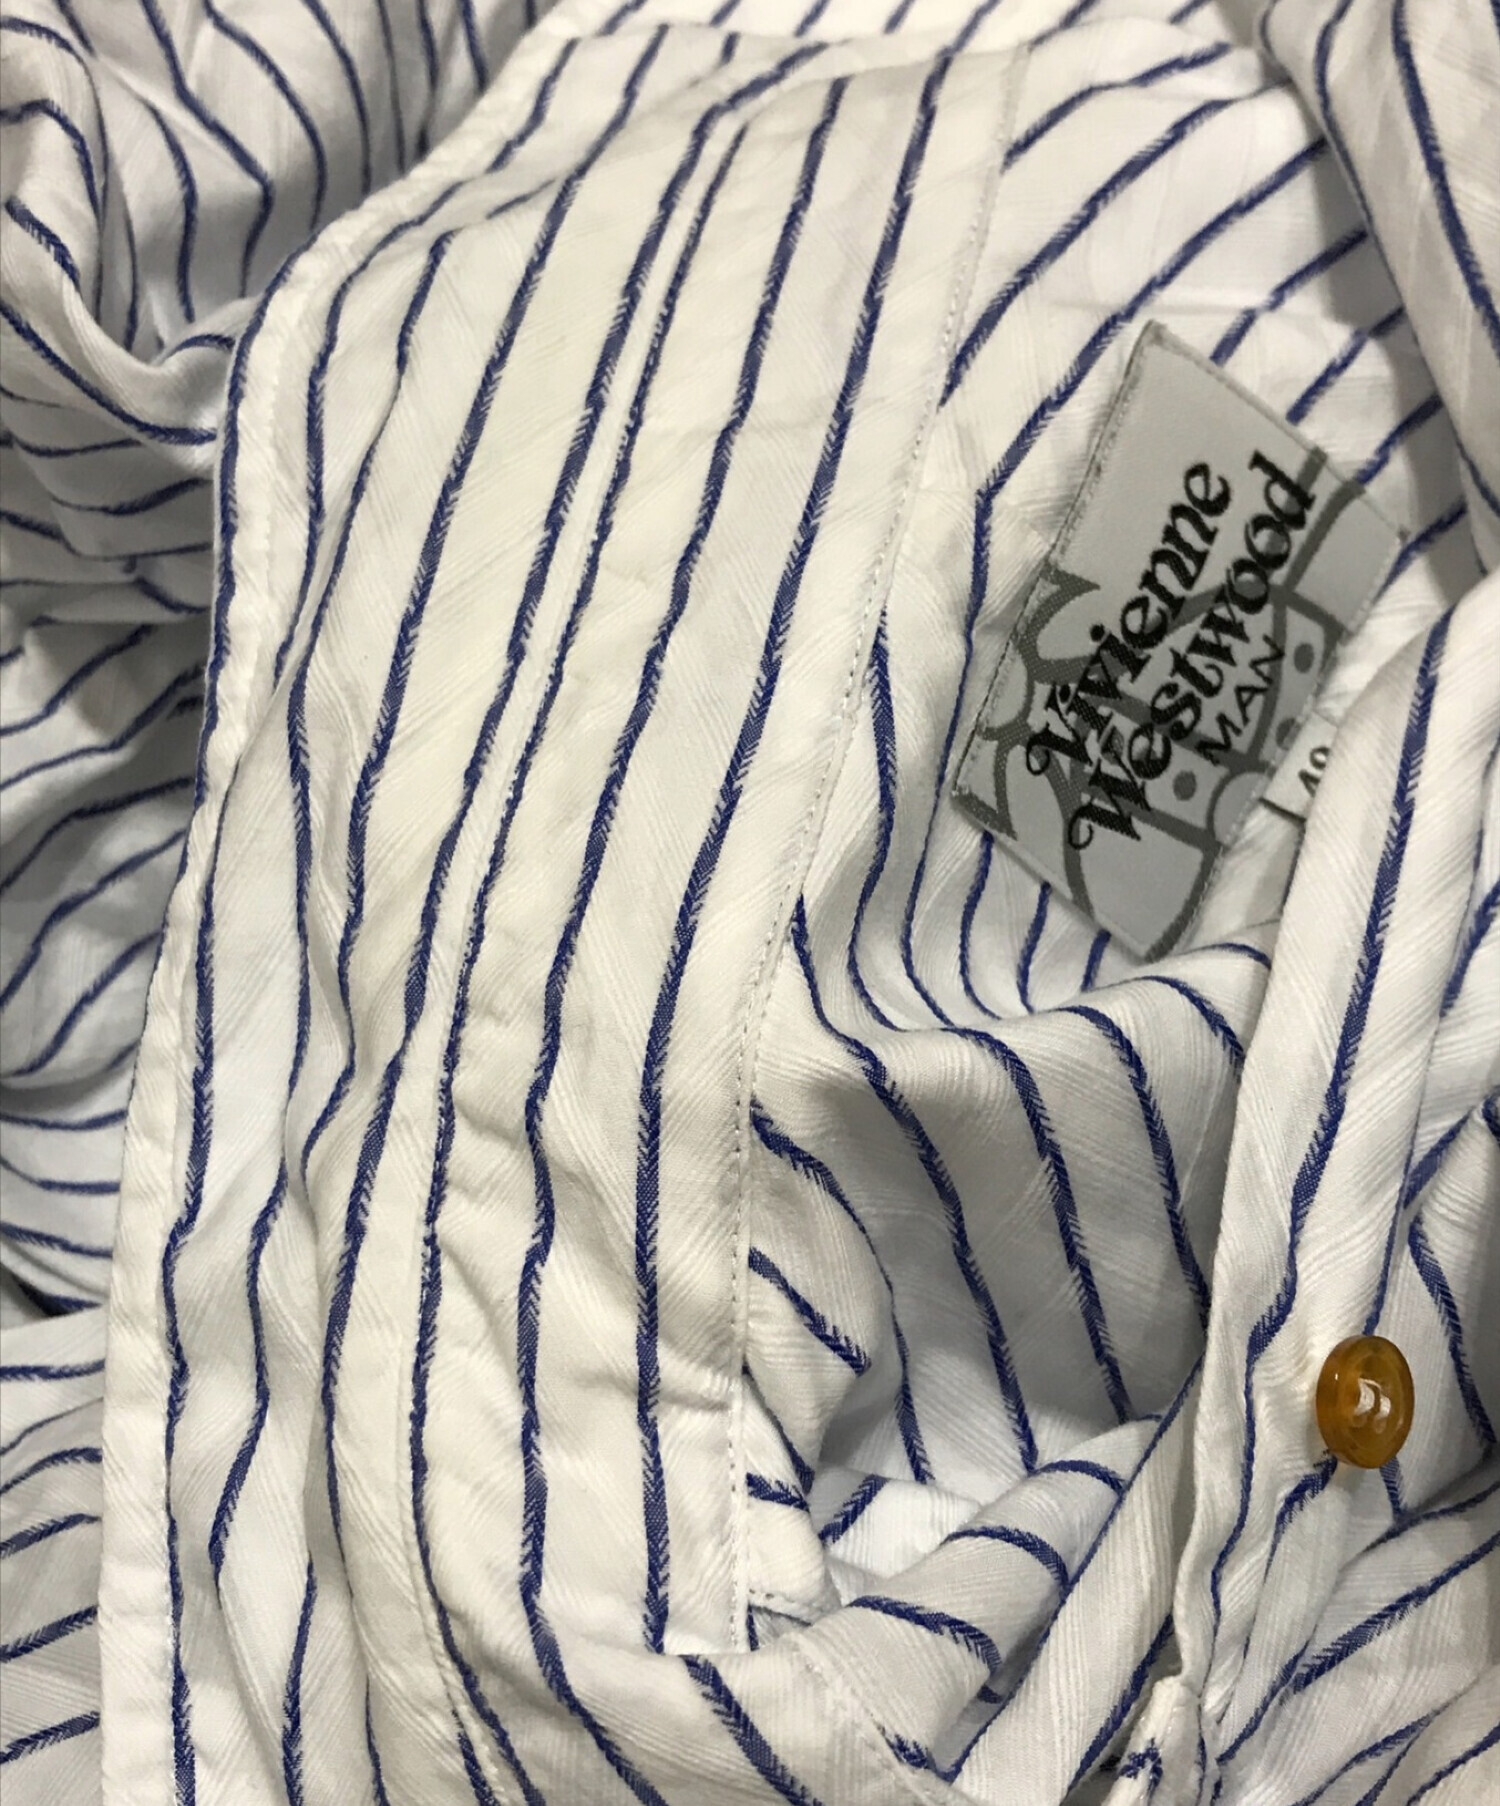 Vivienne Westwood man (ヴィヴィアン ウェストウッド マン) オーブ刺繍ストライプシャツ ブルー×ホワイト サイズ:48